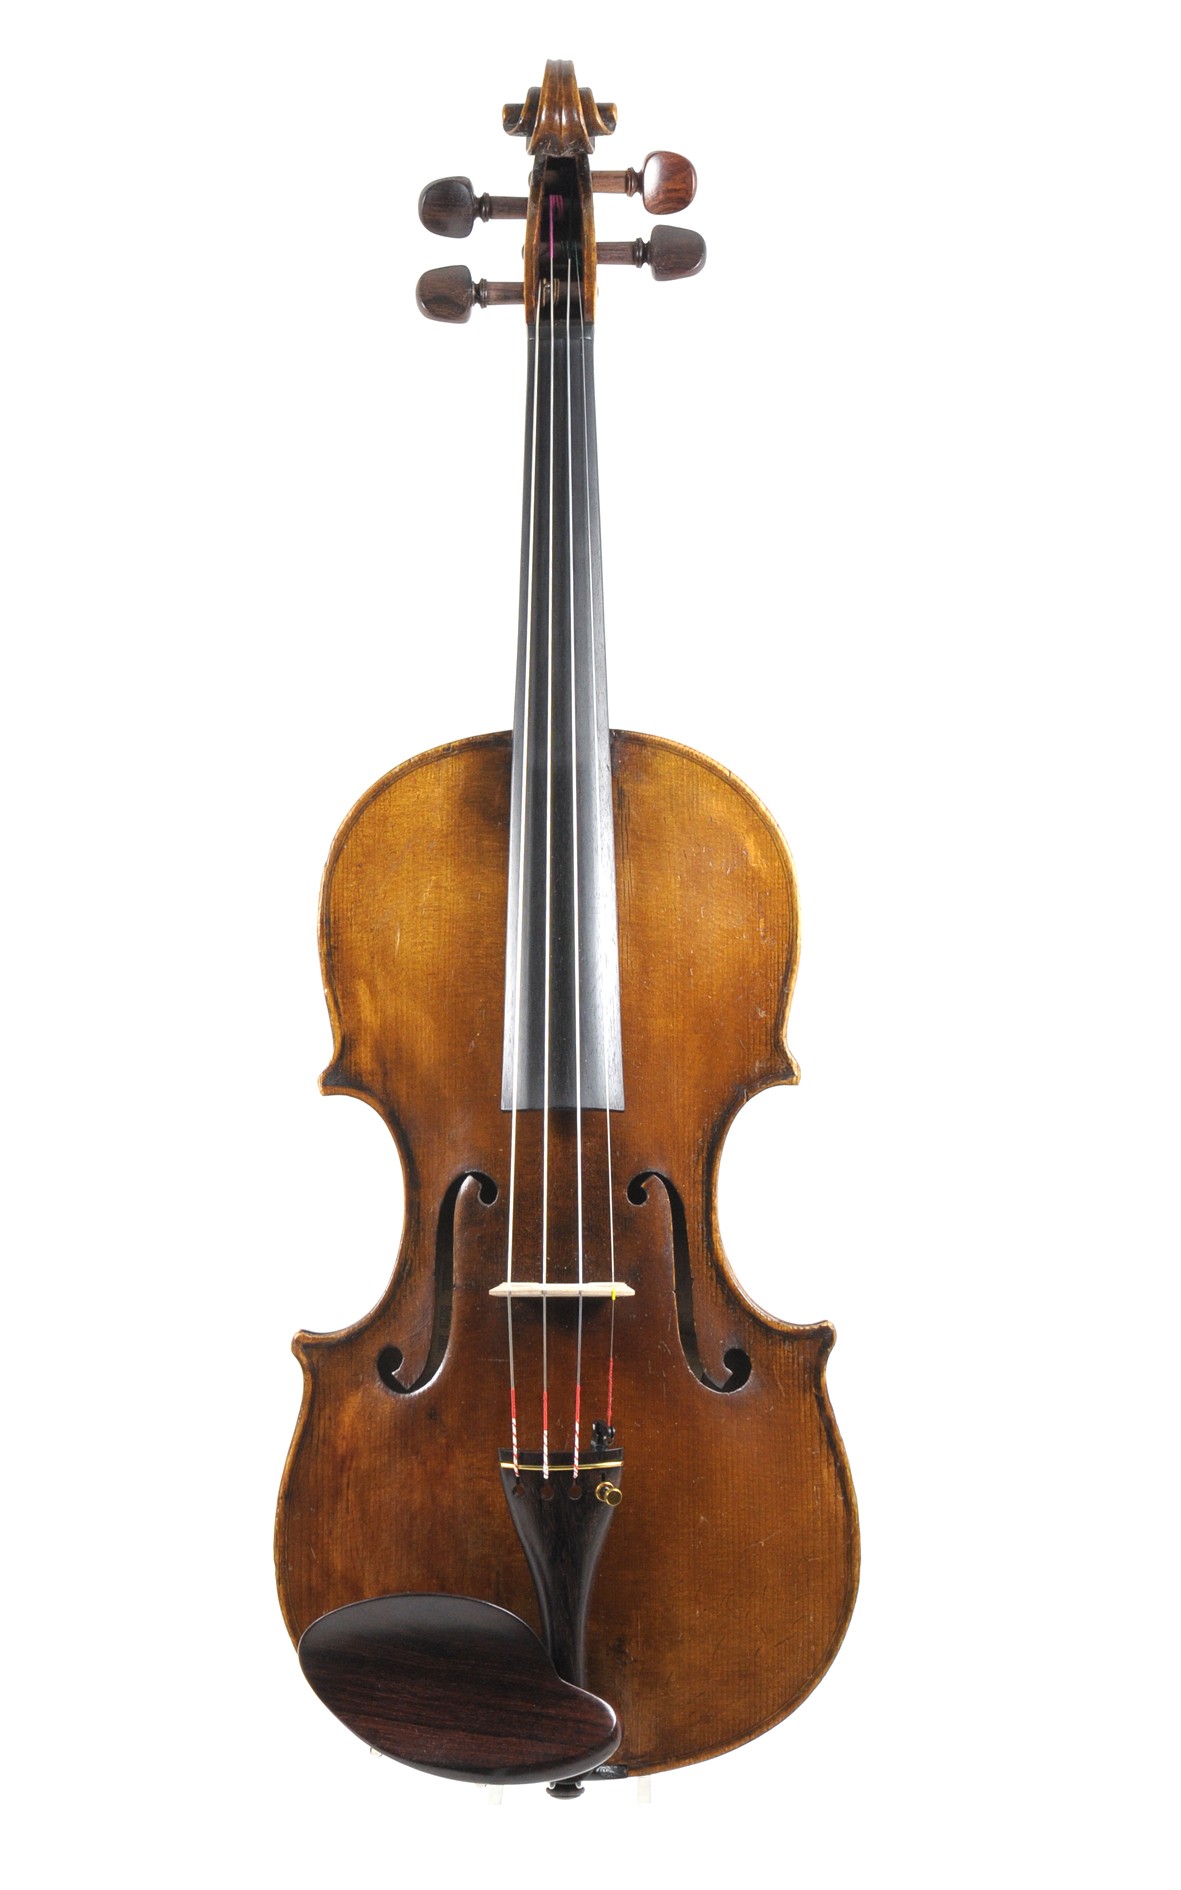 H. C. Stümpel, violin Facon Joseph Joachim, 1882 - top